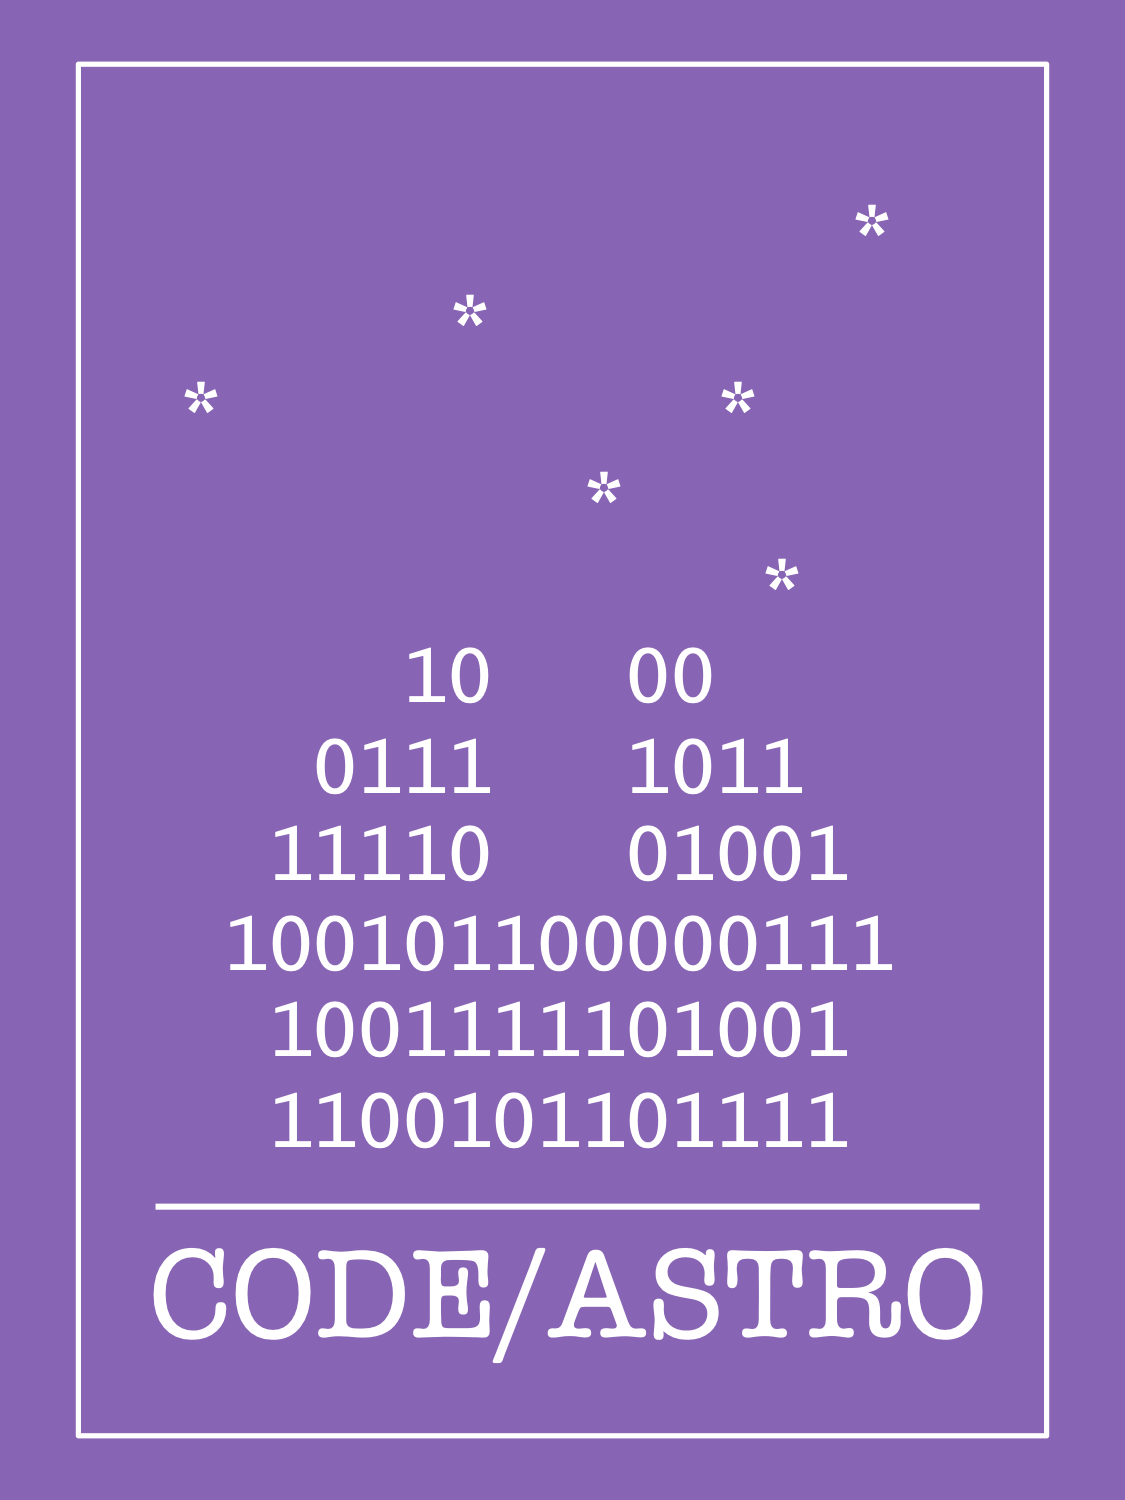 Code/Astro Logo